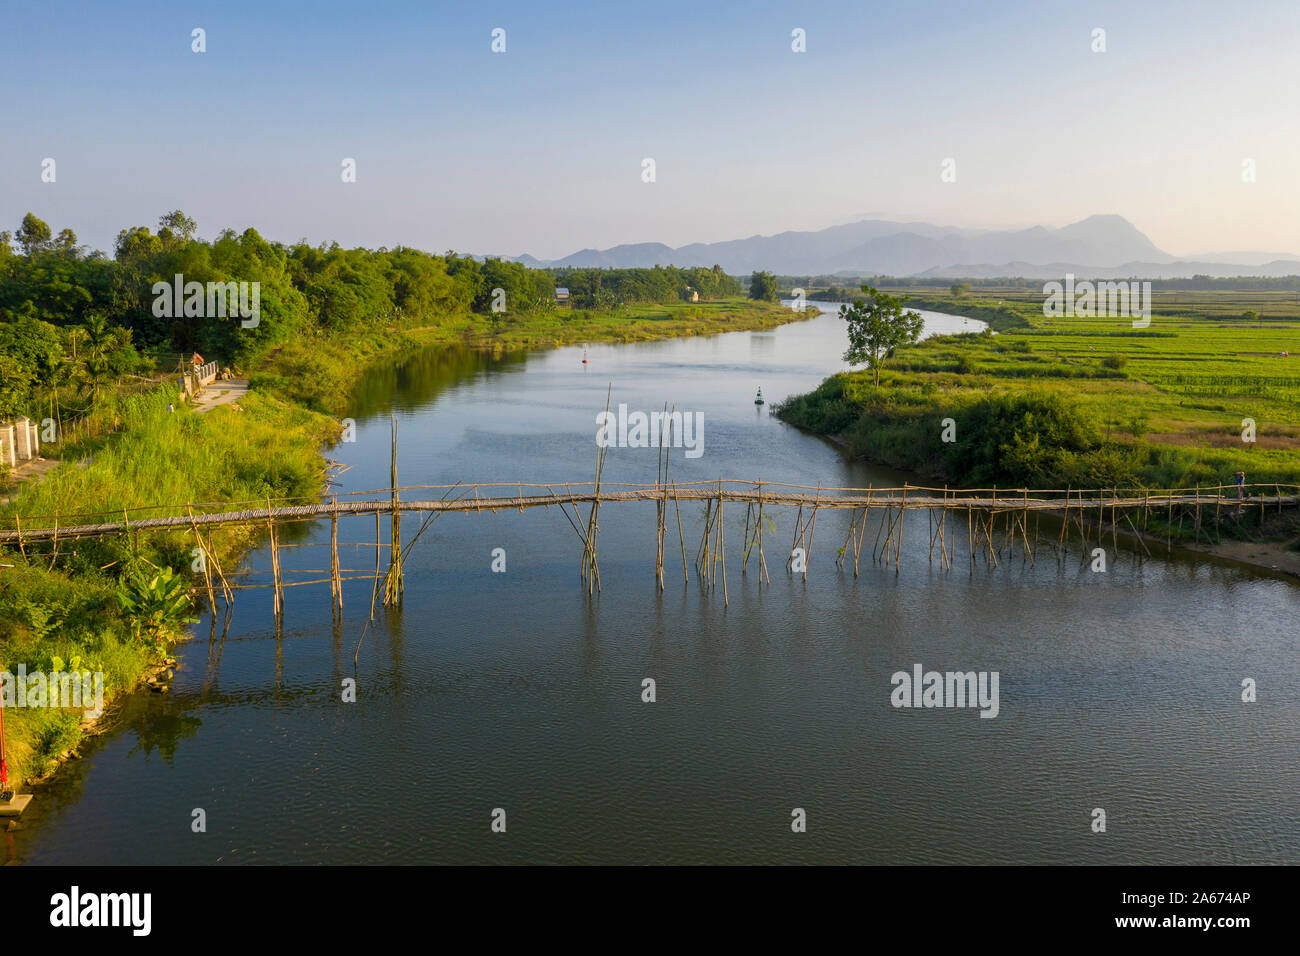 A bamboo bridge crosses a river near Hoi An, Hoi An, Quang Nam Province, Vietnam Stock Photo